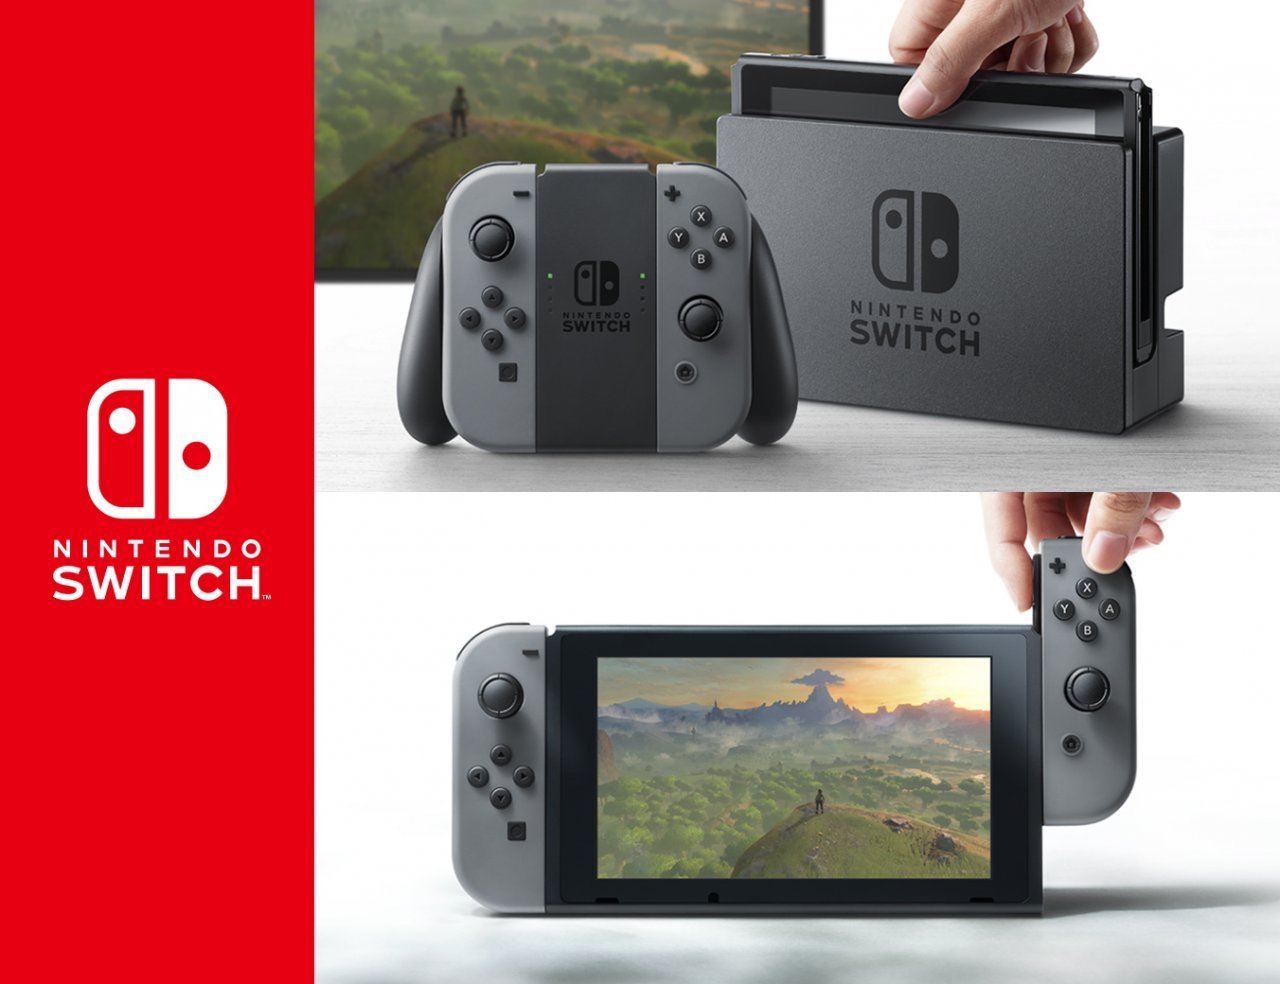 Nintendo switch direct leak - nintendo post - Imgur